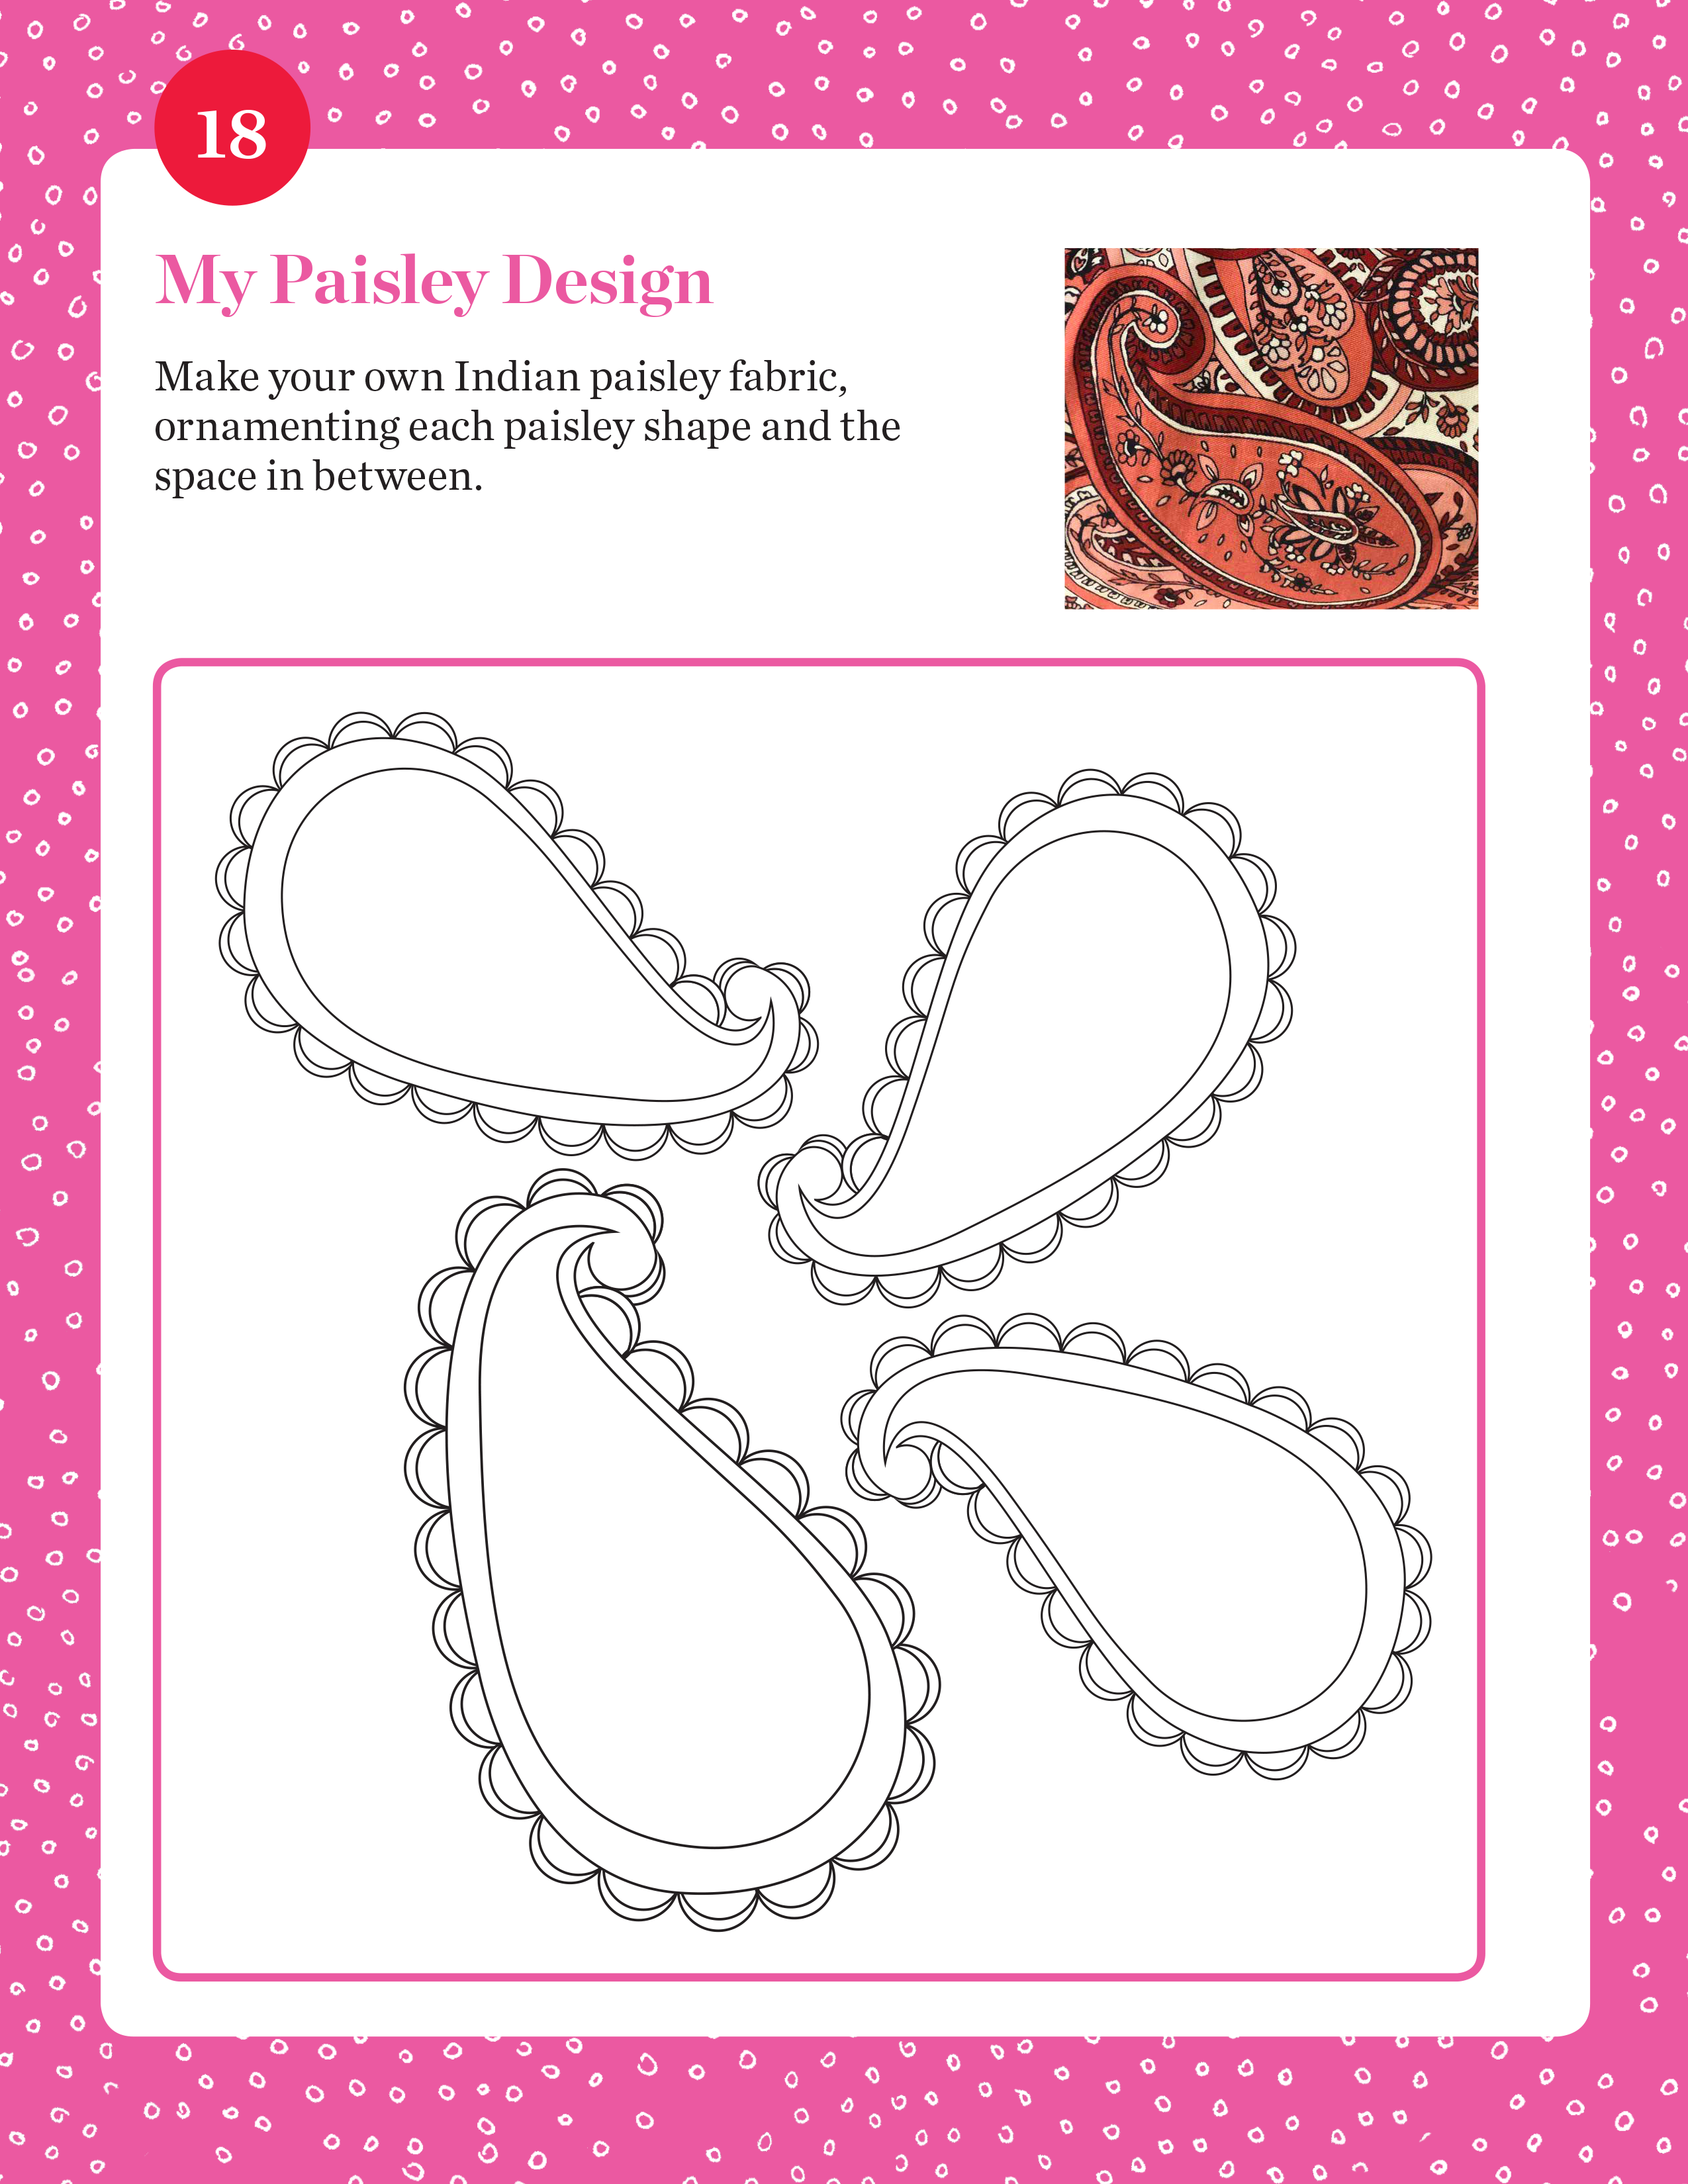 My Paisley Design